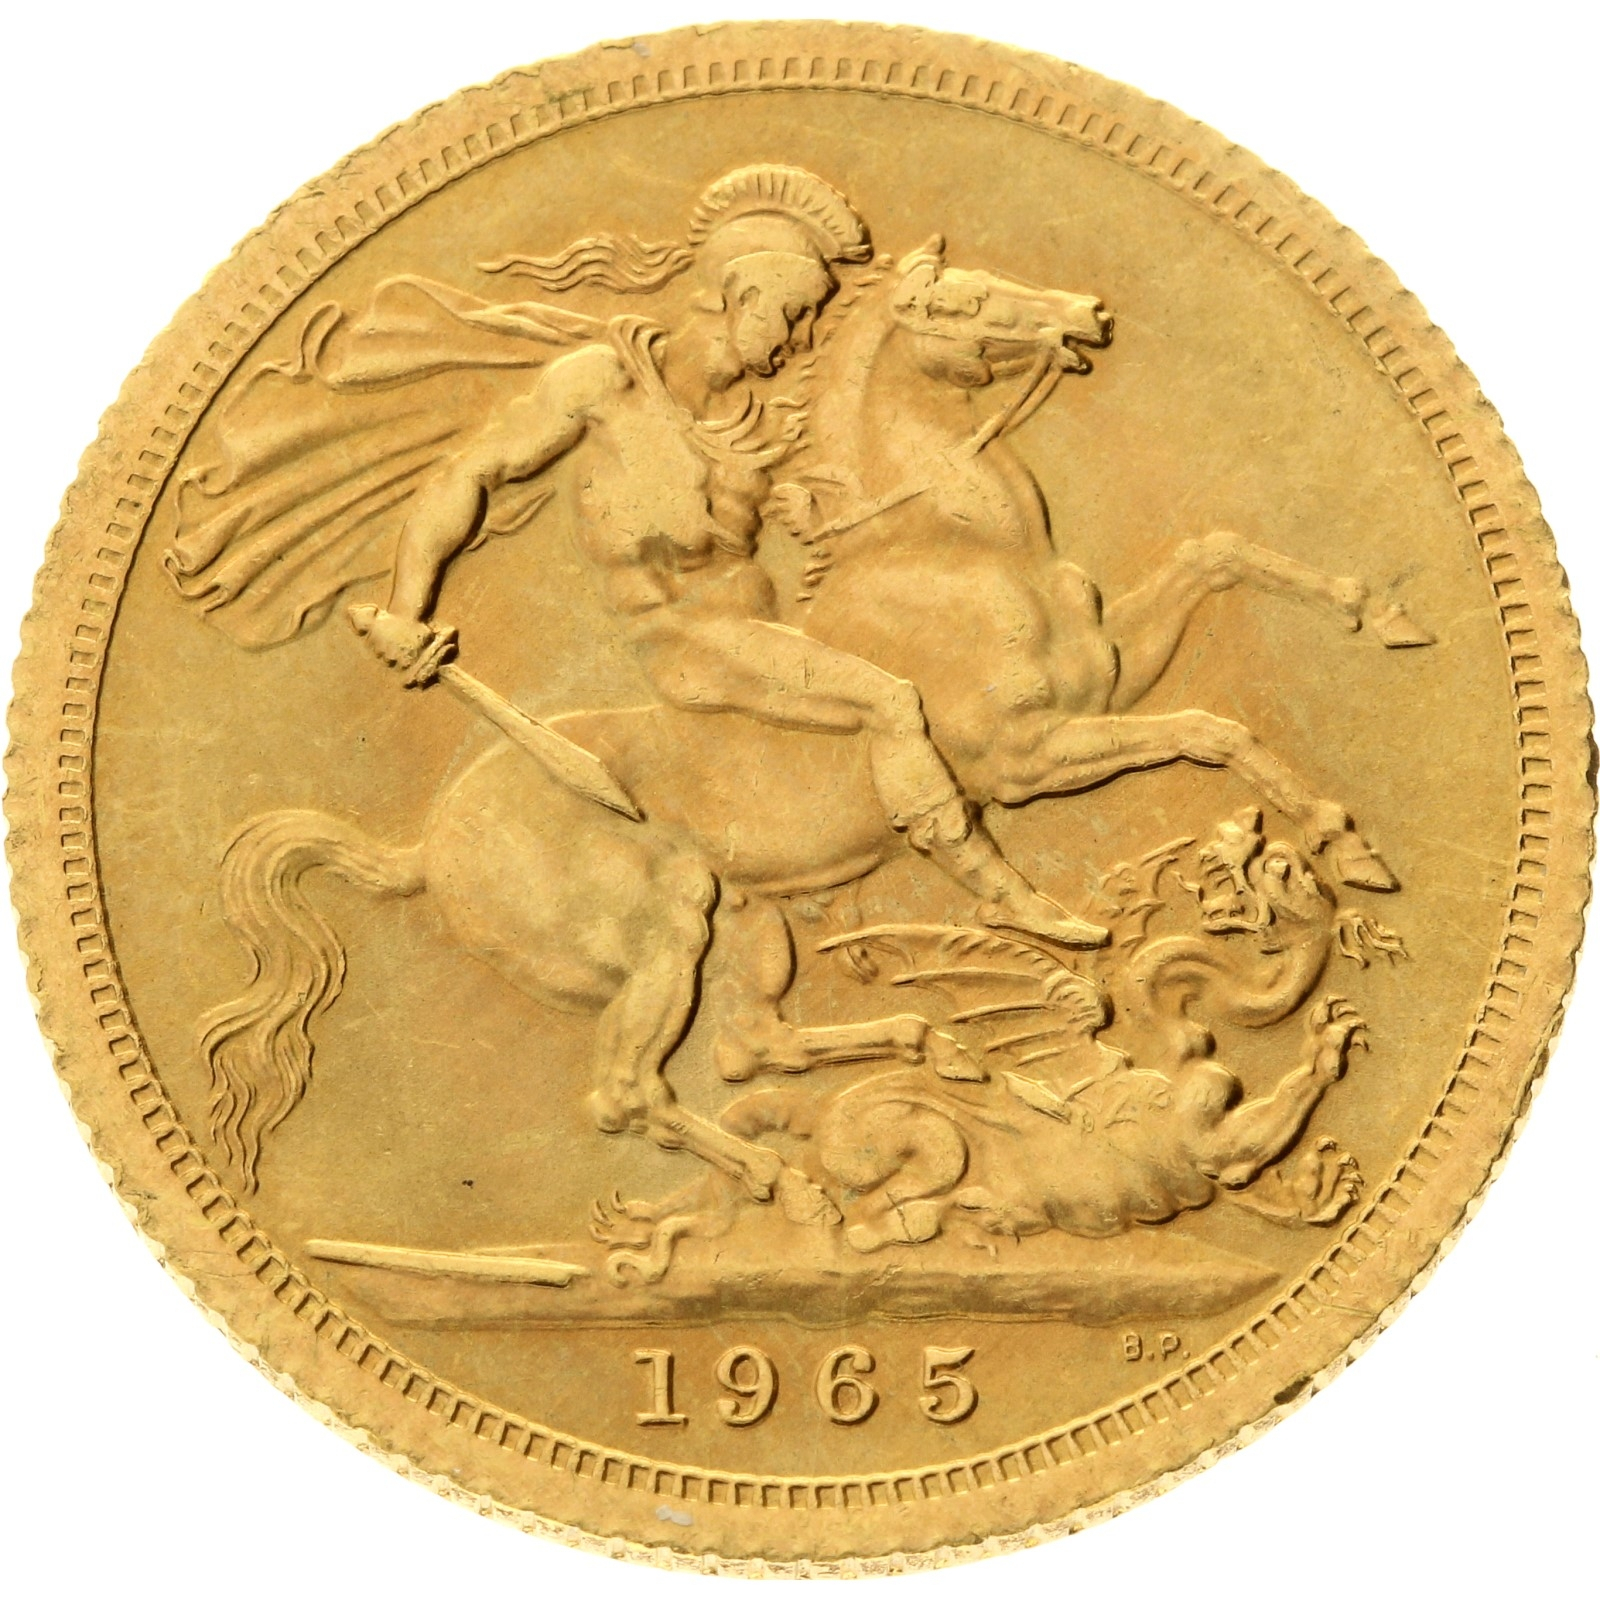 United Kingdom - 1 Sovereign - 1965 - Elizabeth II 